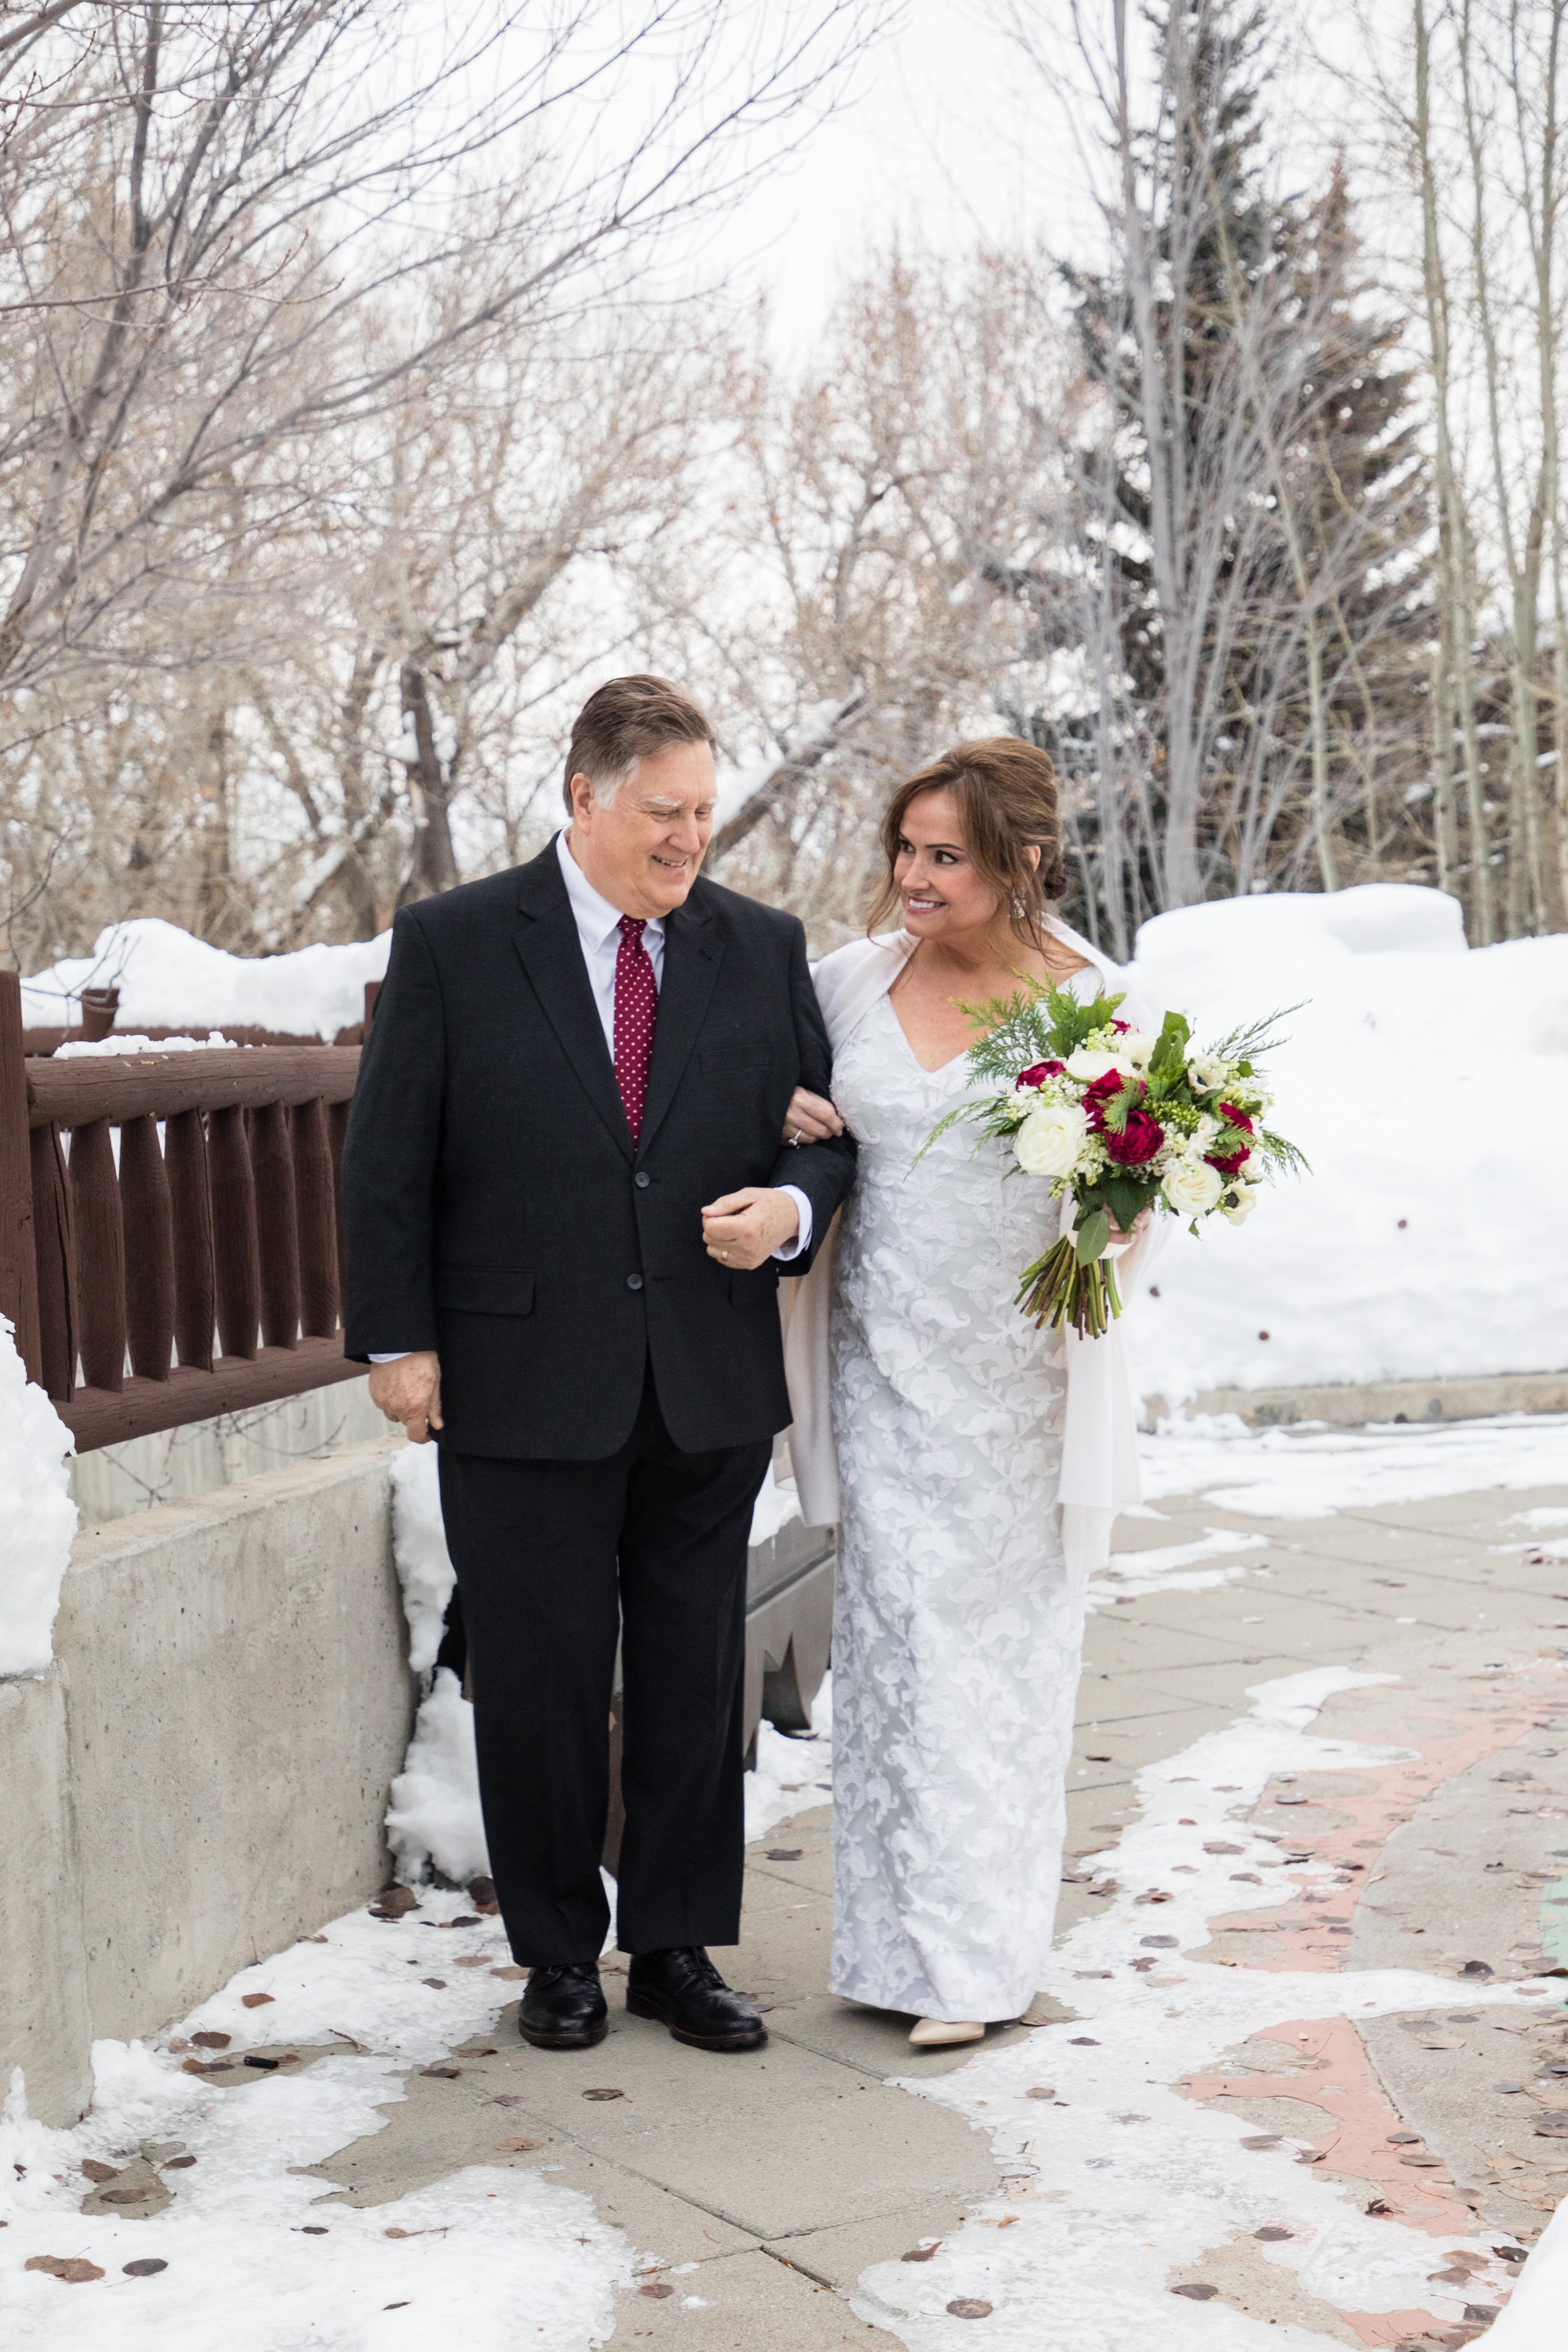 Winter wedding in Ketchum, Idaho with photography by Tessa Sheehan